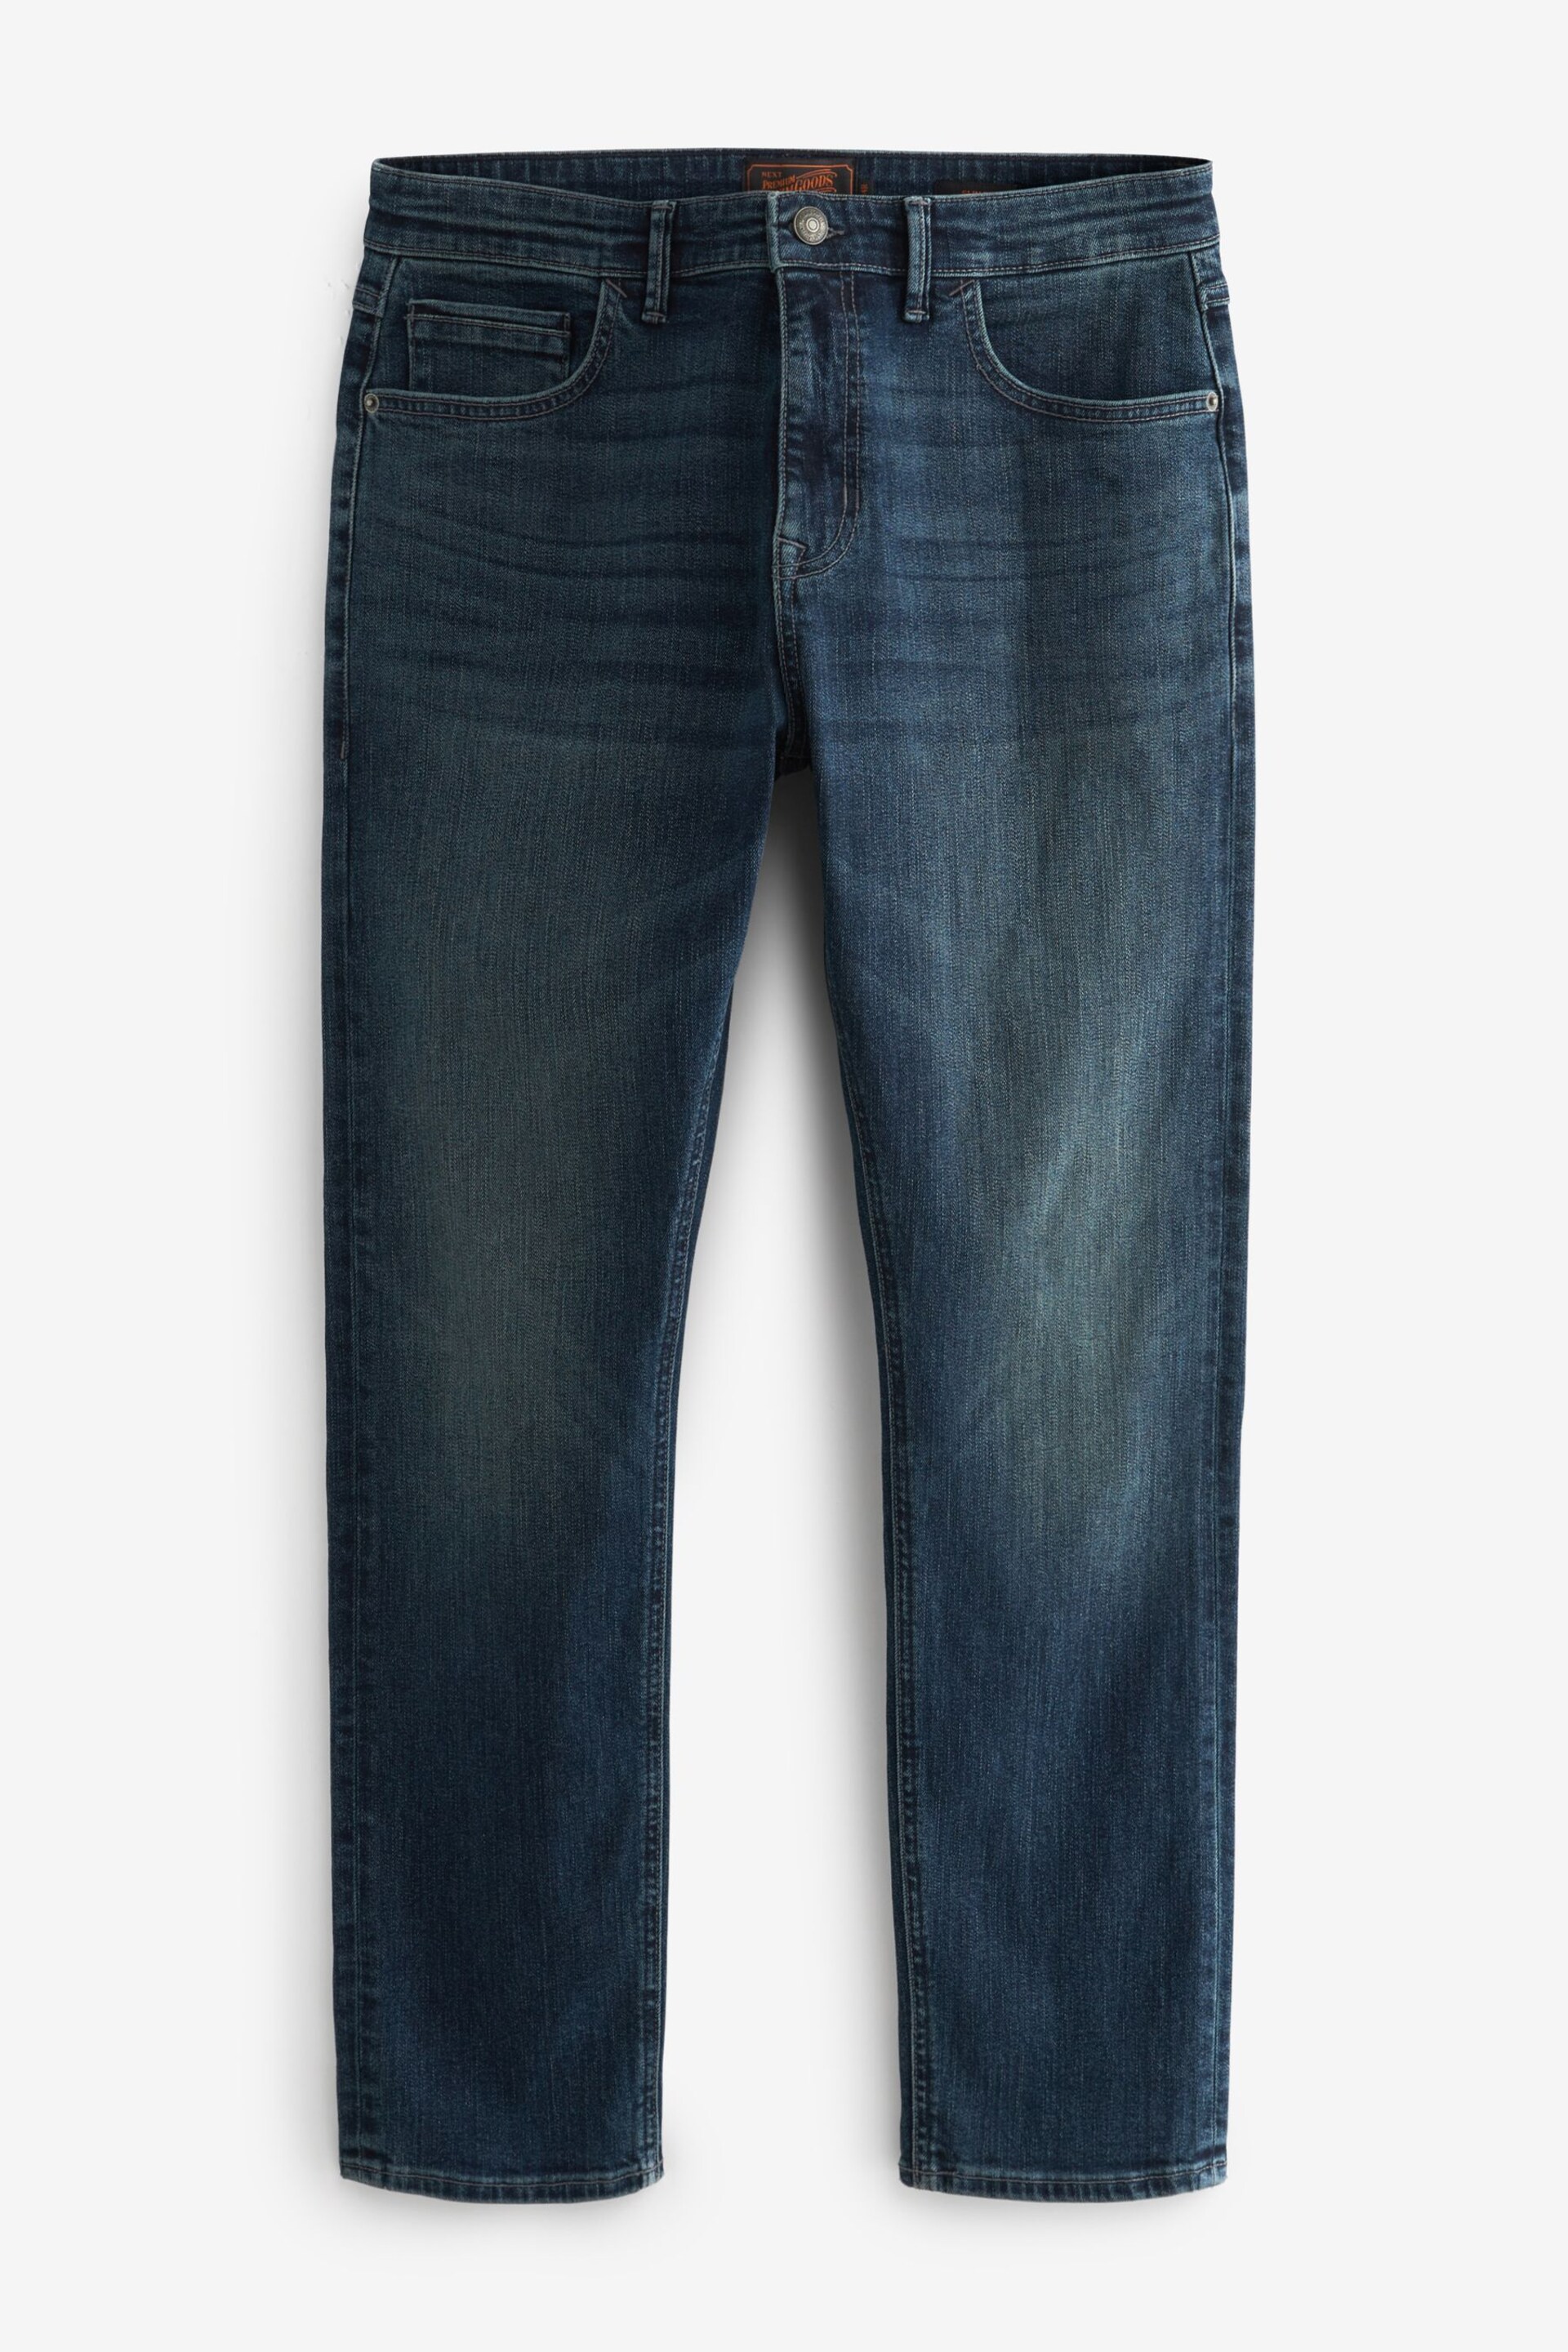 Blue Vintage Tint Slim Fit Premium Heavyweight Signature Cotton Jeans - Image 7 of 11